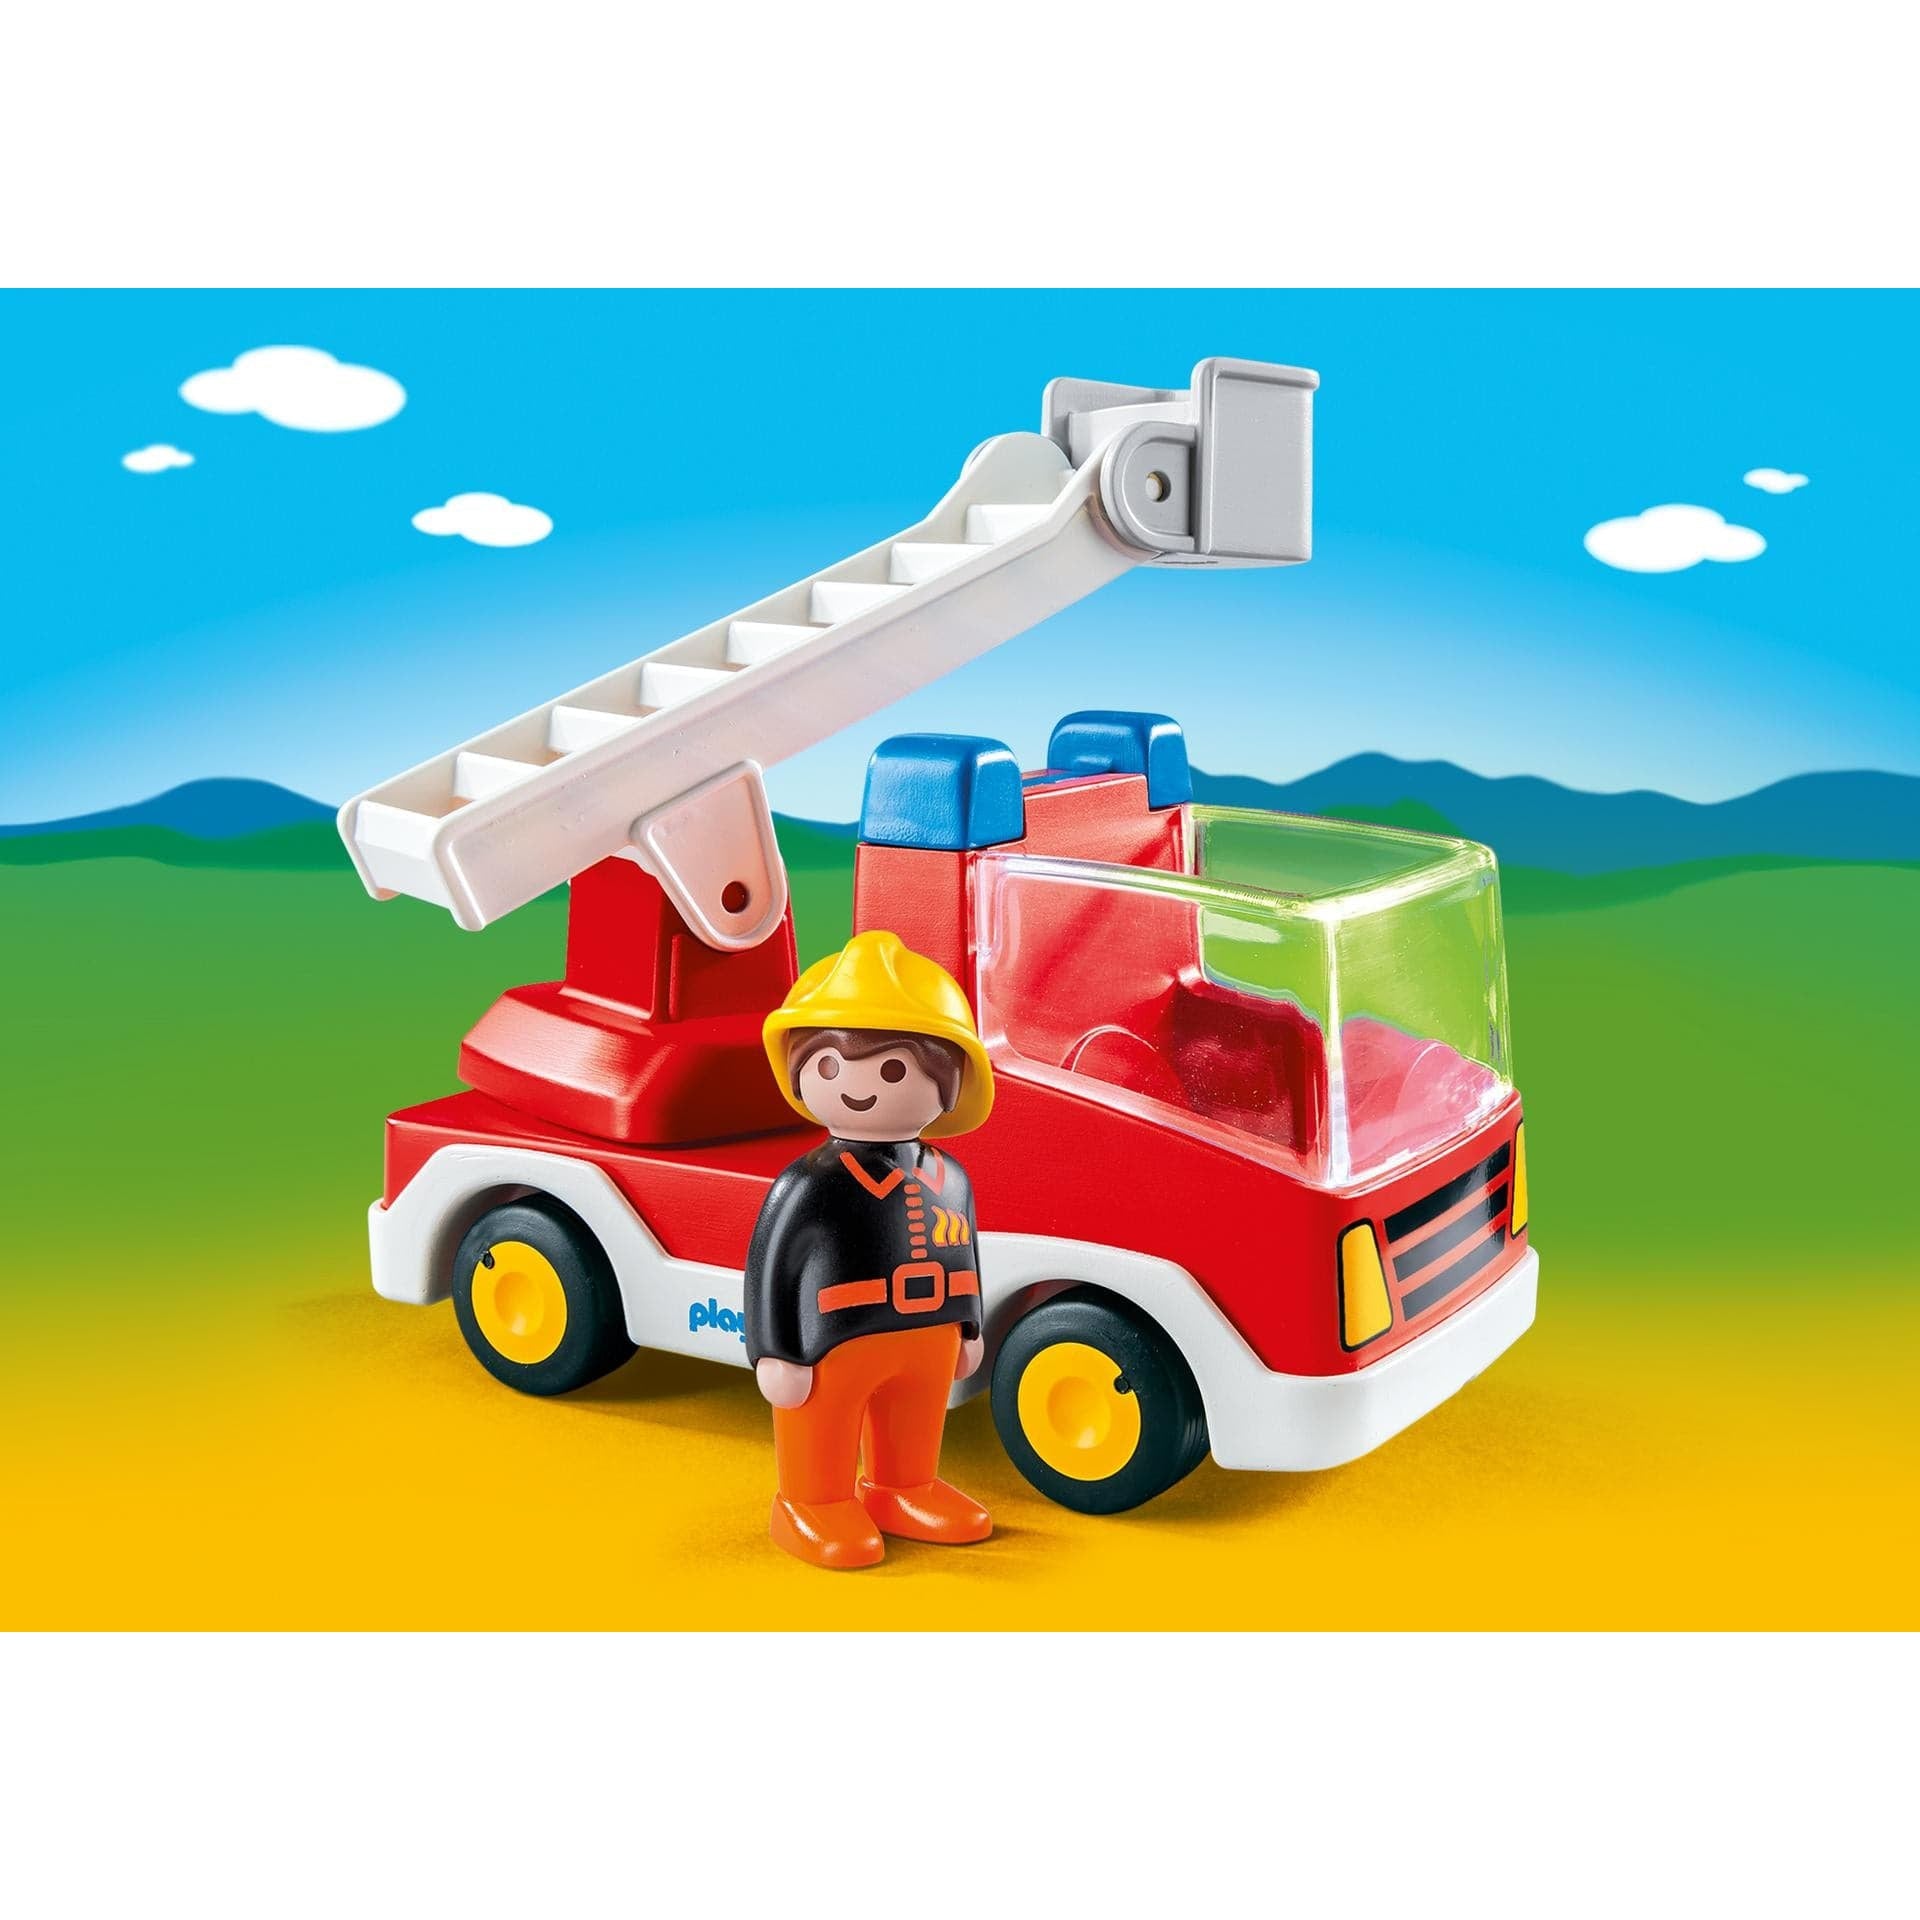 Playmobil-1.2.3. Ladder Unit Fire Truck-6967-Legacy Toys